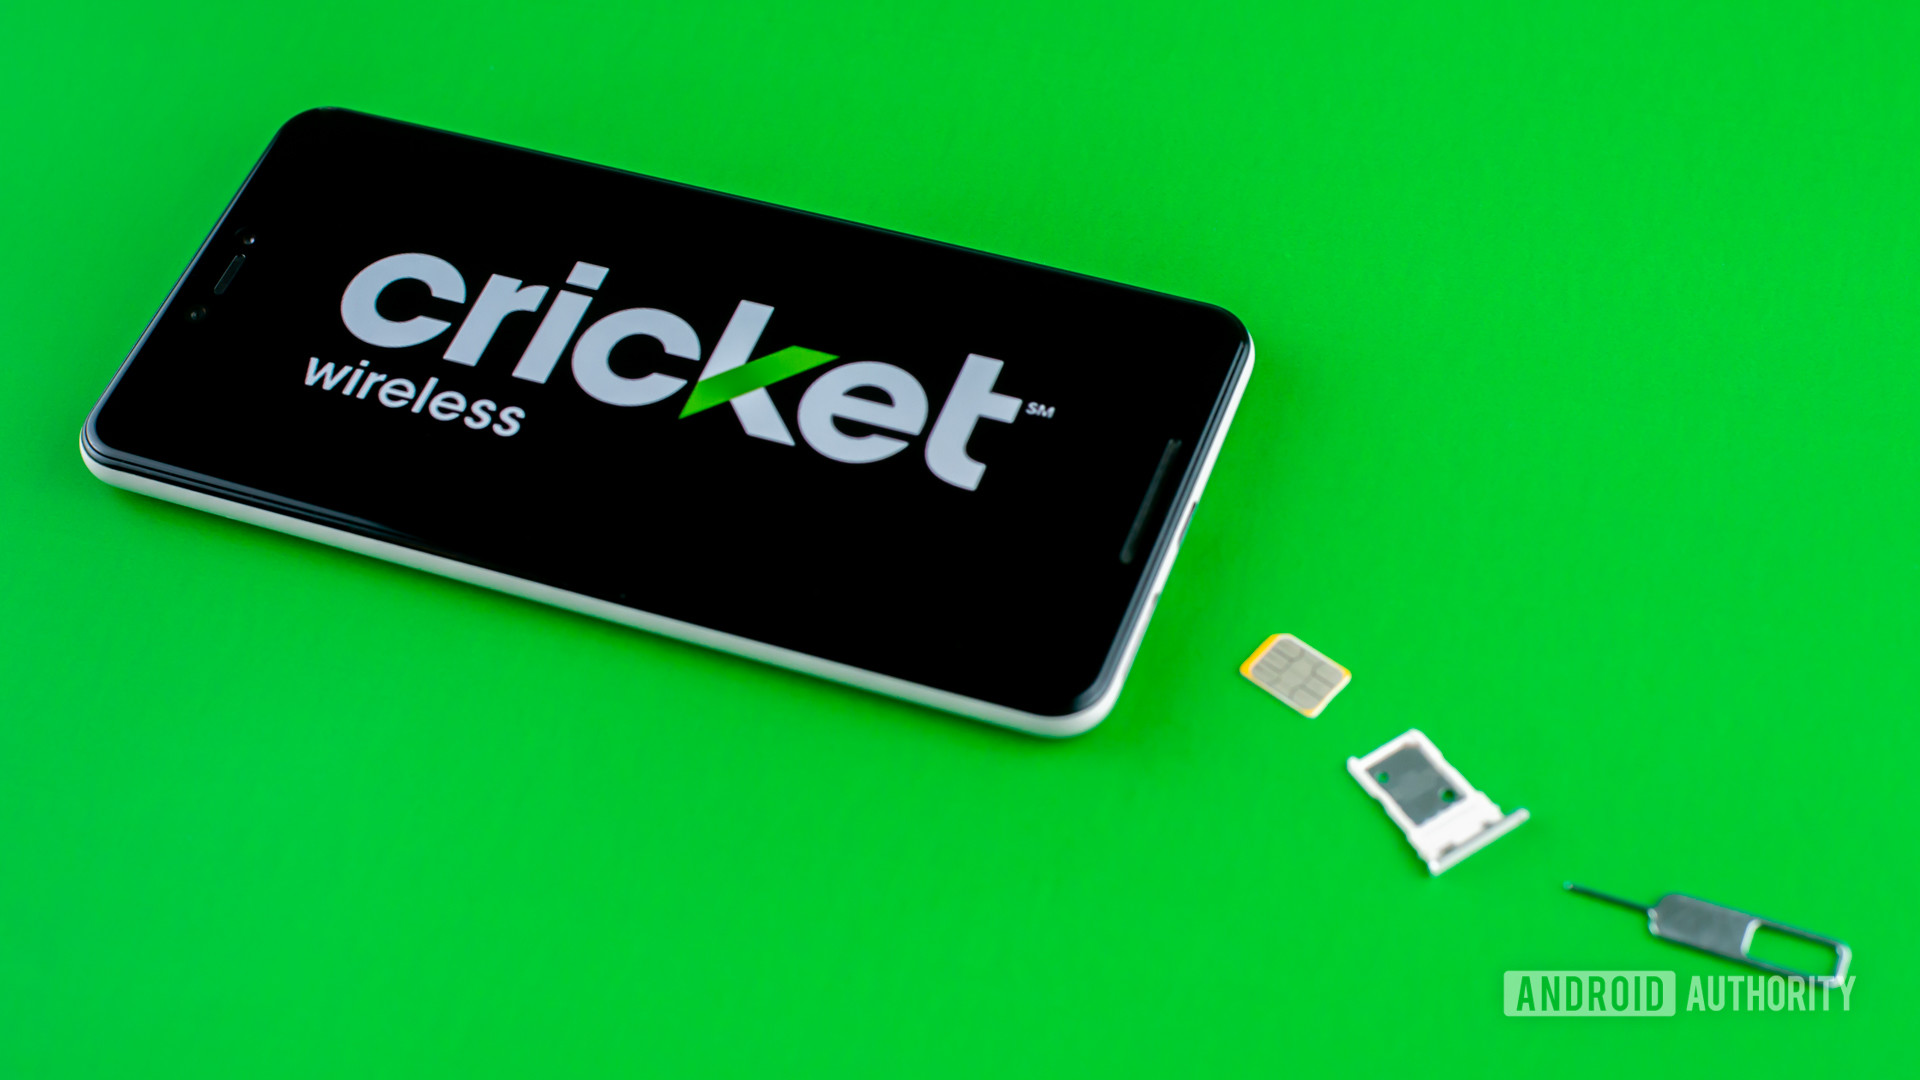 Cricket Wireless stock photo 2